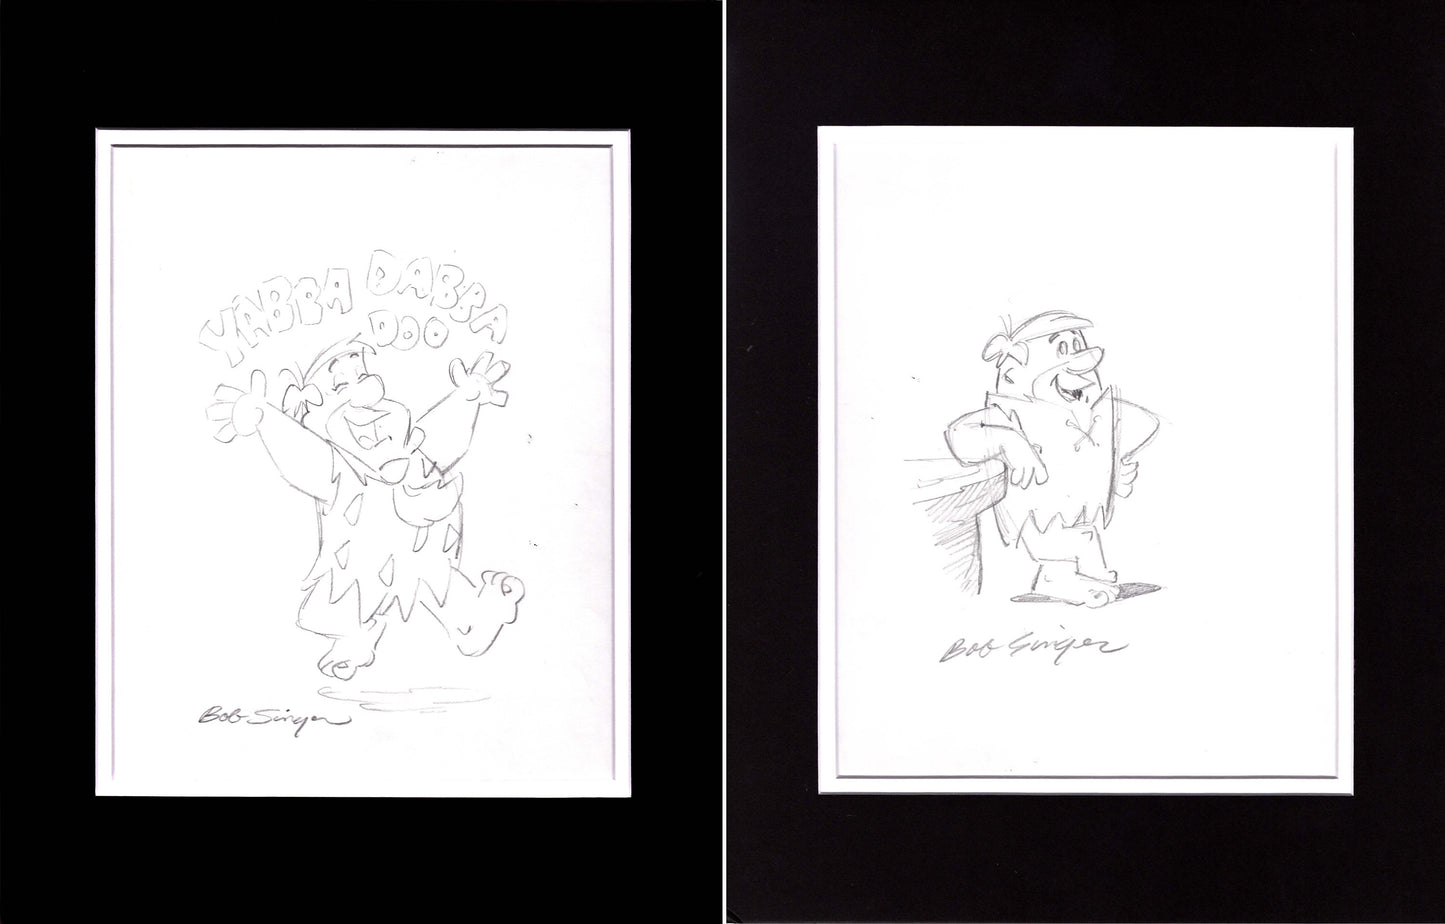 2 LOT The FLINTSTONES Fred Flintstone and Barney Rubble Pencil Drawings Signed by Bob Singer